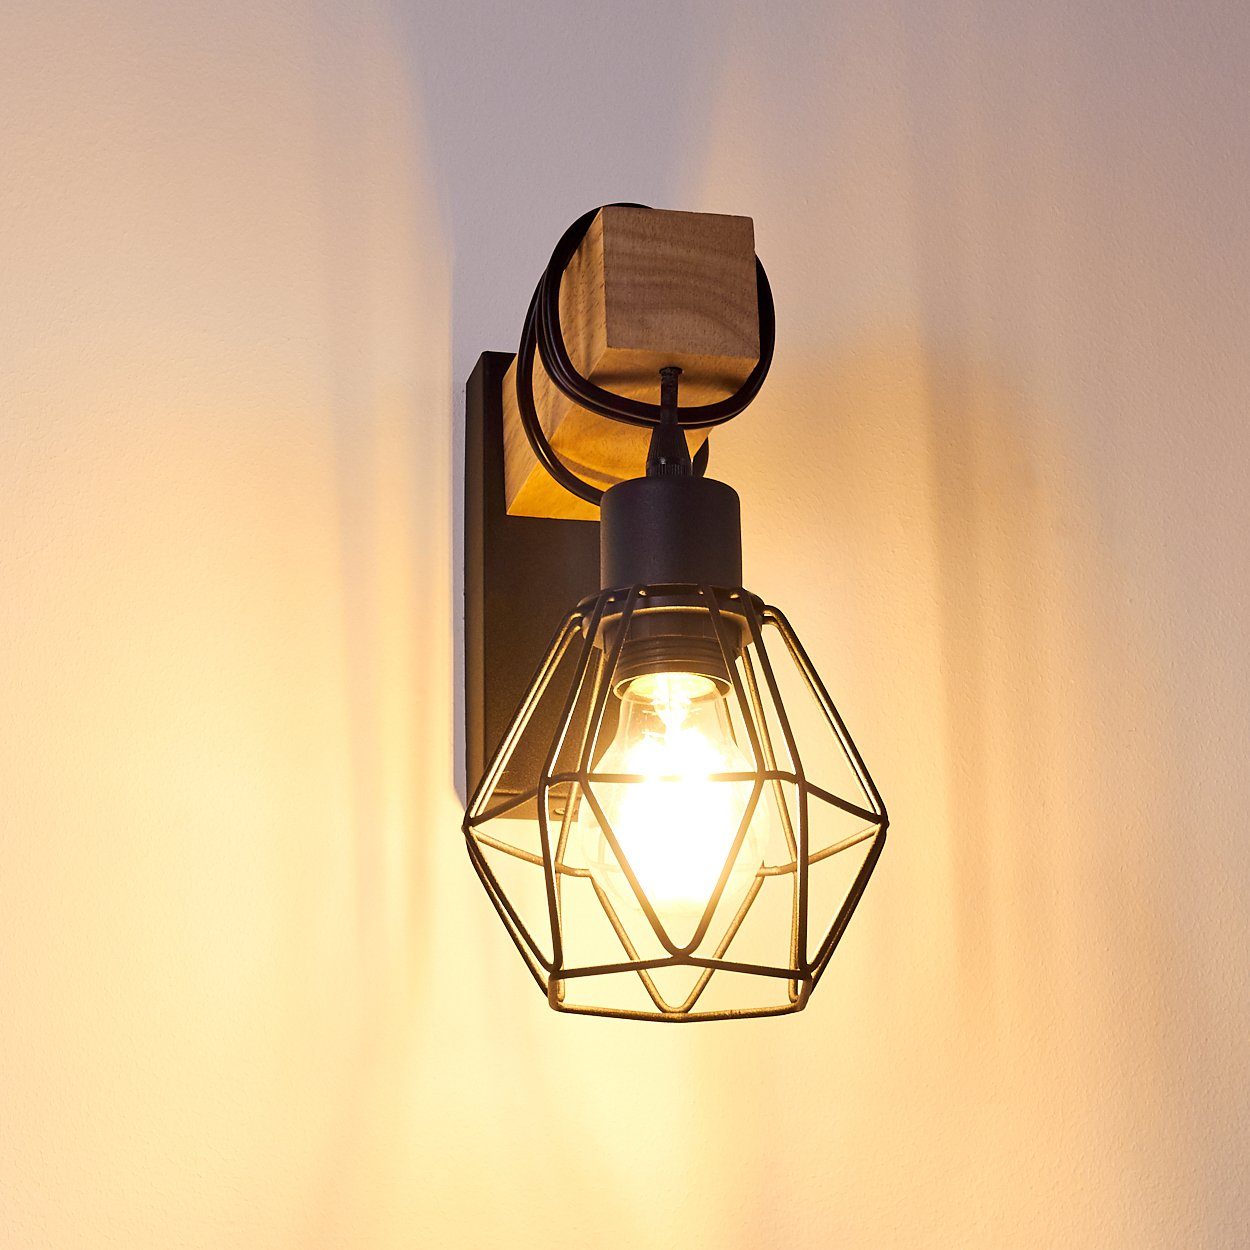 hofstein Wandleuchte Vintage Wohn Schlaf Beleuchtung Lampen Wand Flur Holz/schwarz Zimmer